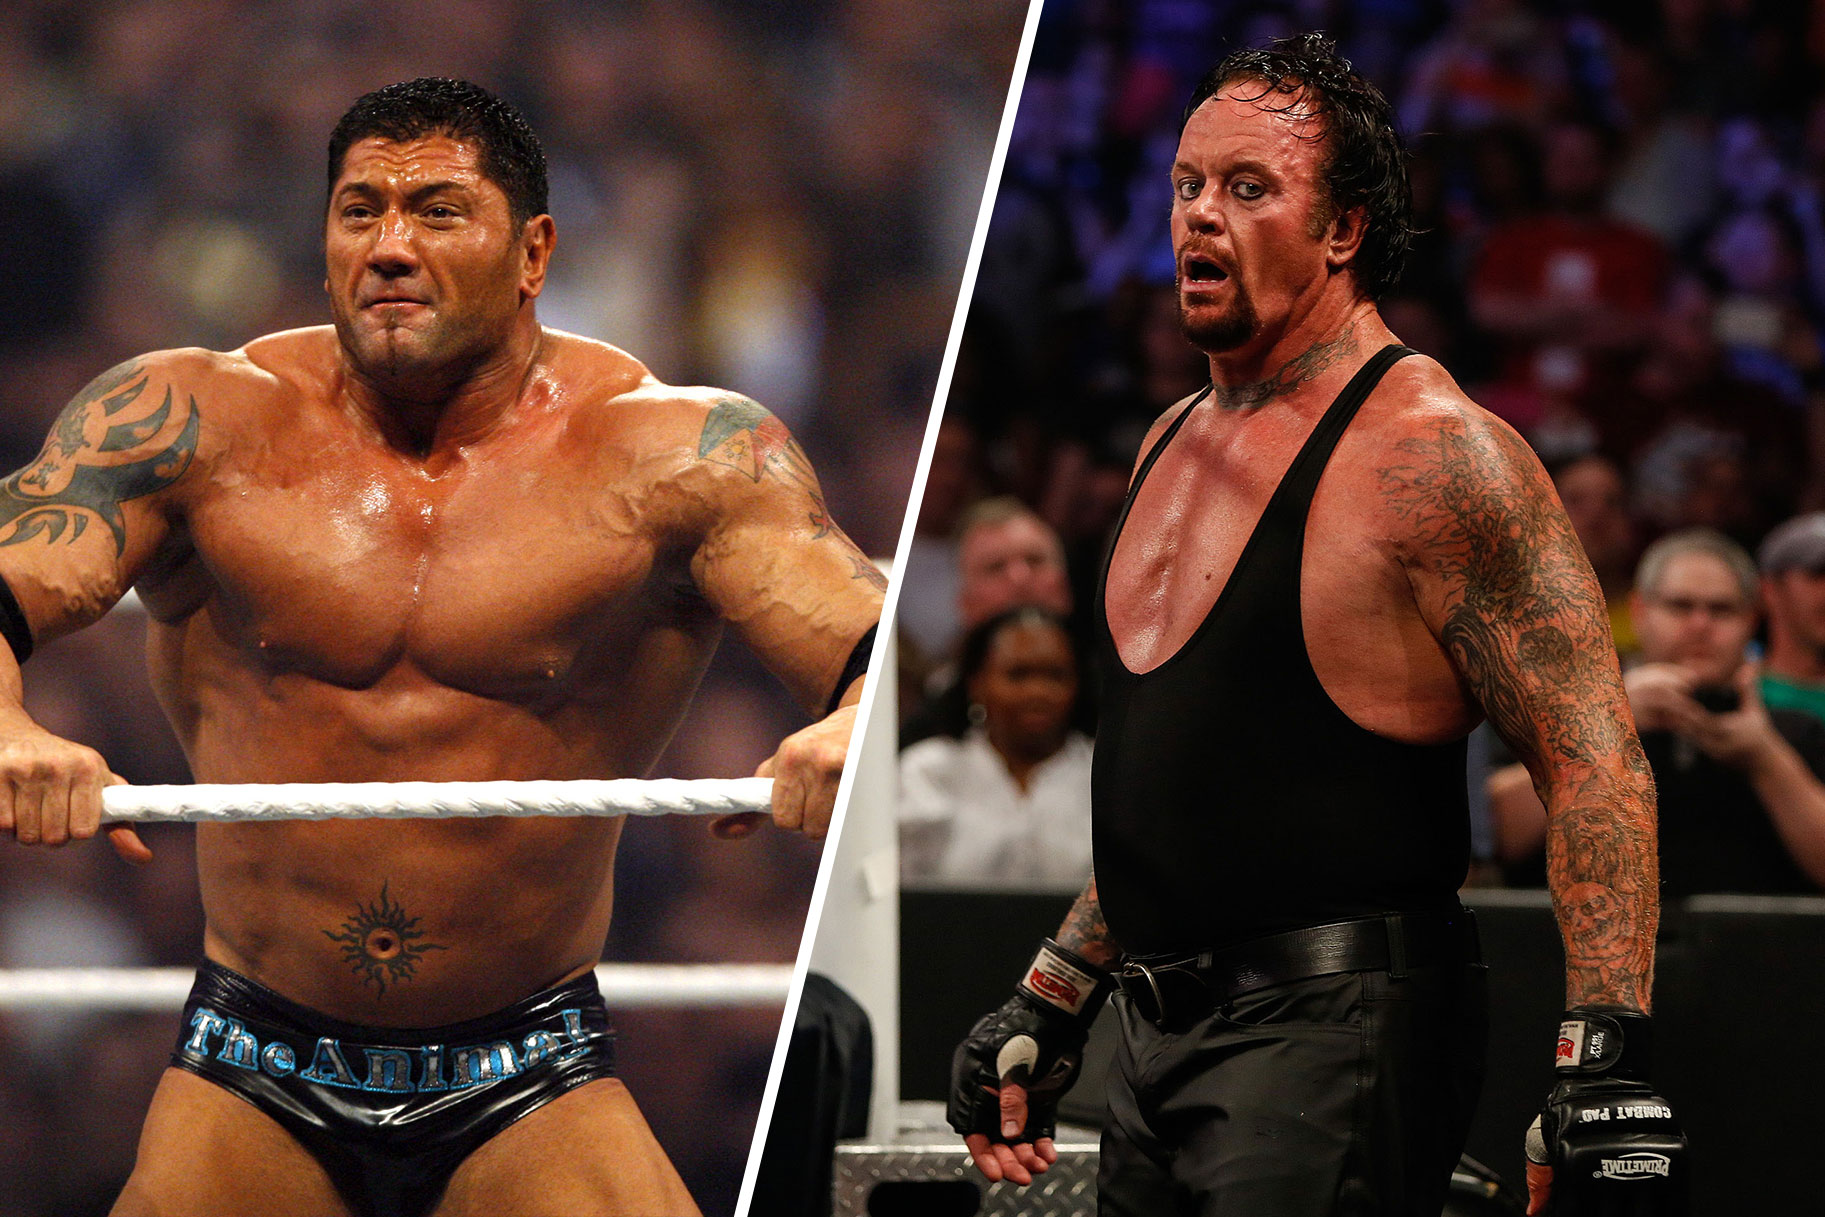 Bautista And Undertaker Split